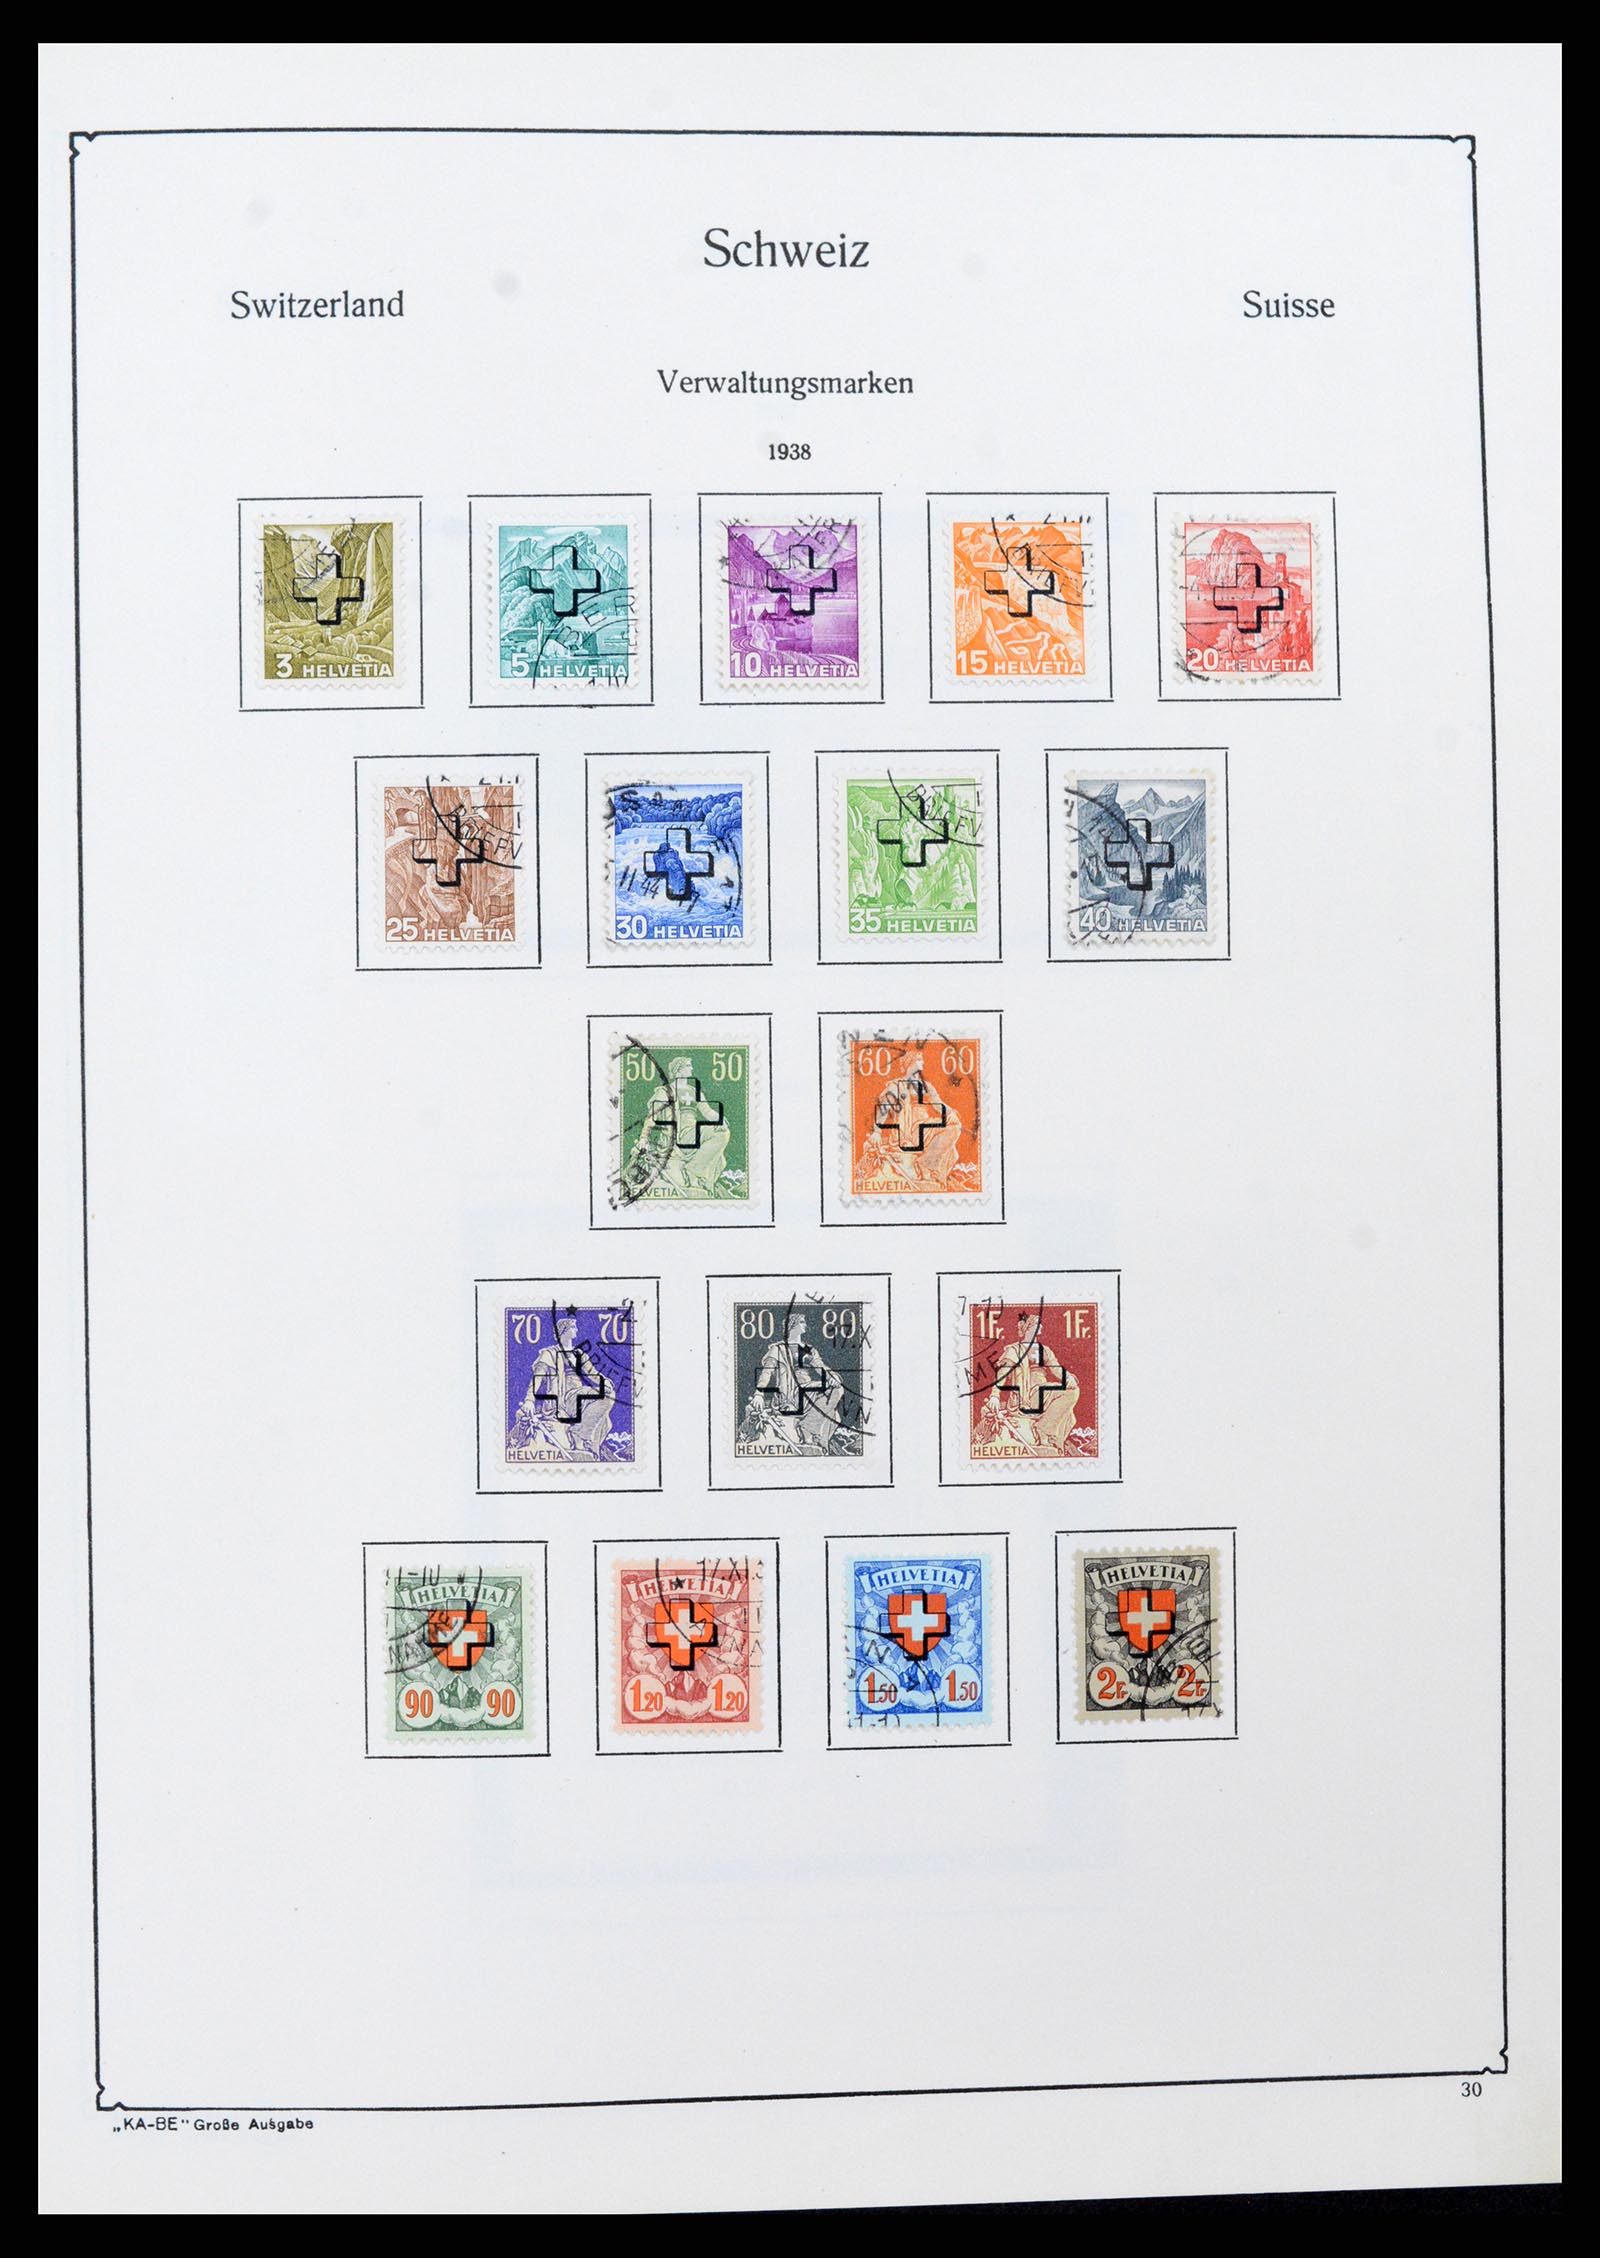 37588 029 - Stamp collection 37588 Switzerland 1854-1974.